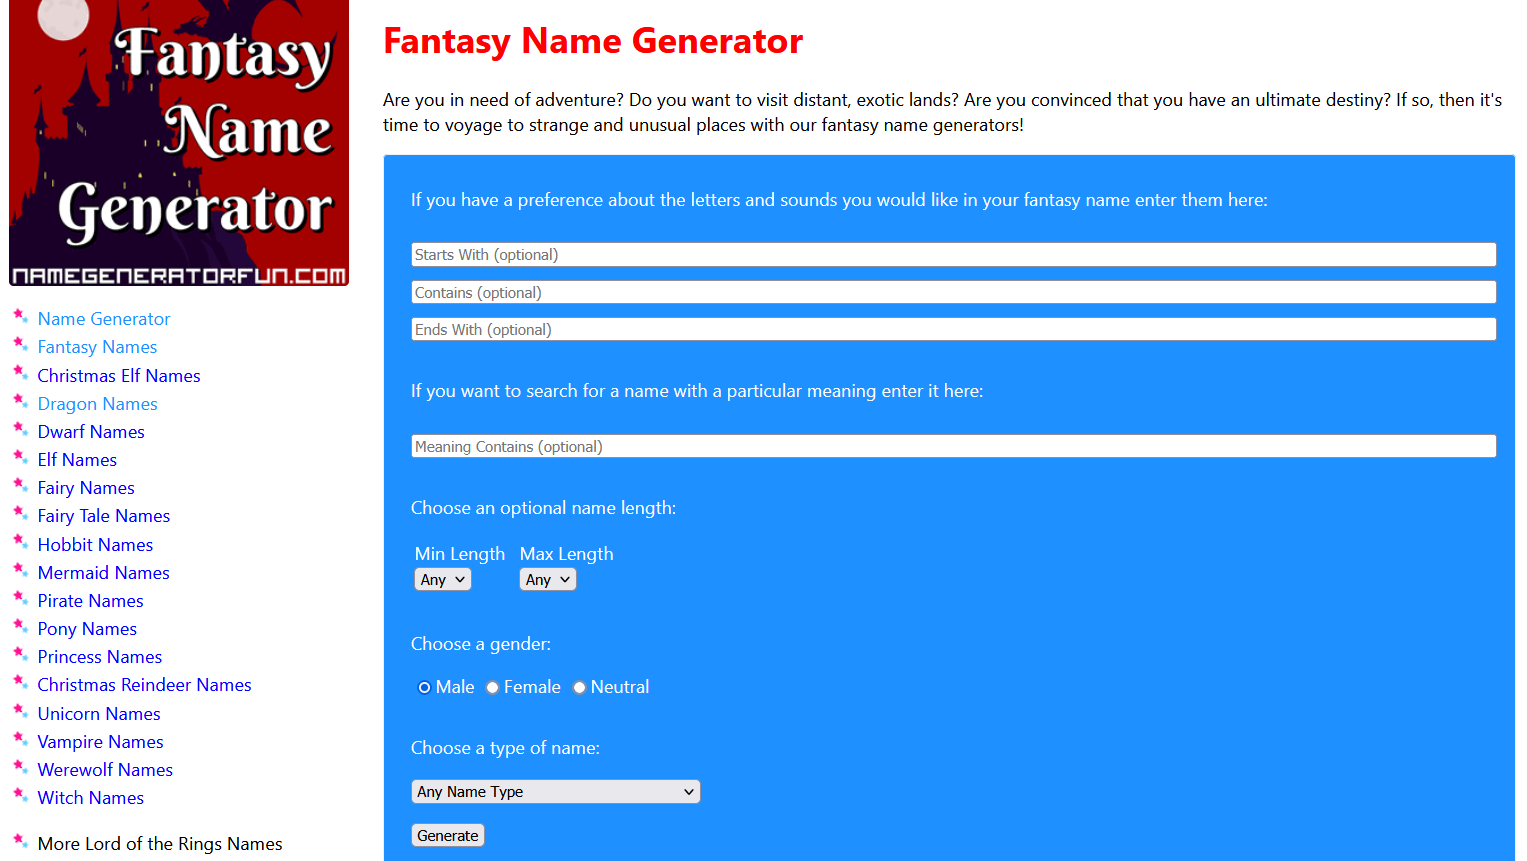 Name Generator Fun Fantasy Category Filtering Options